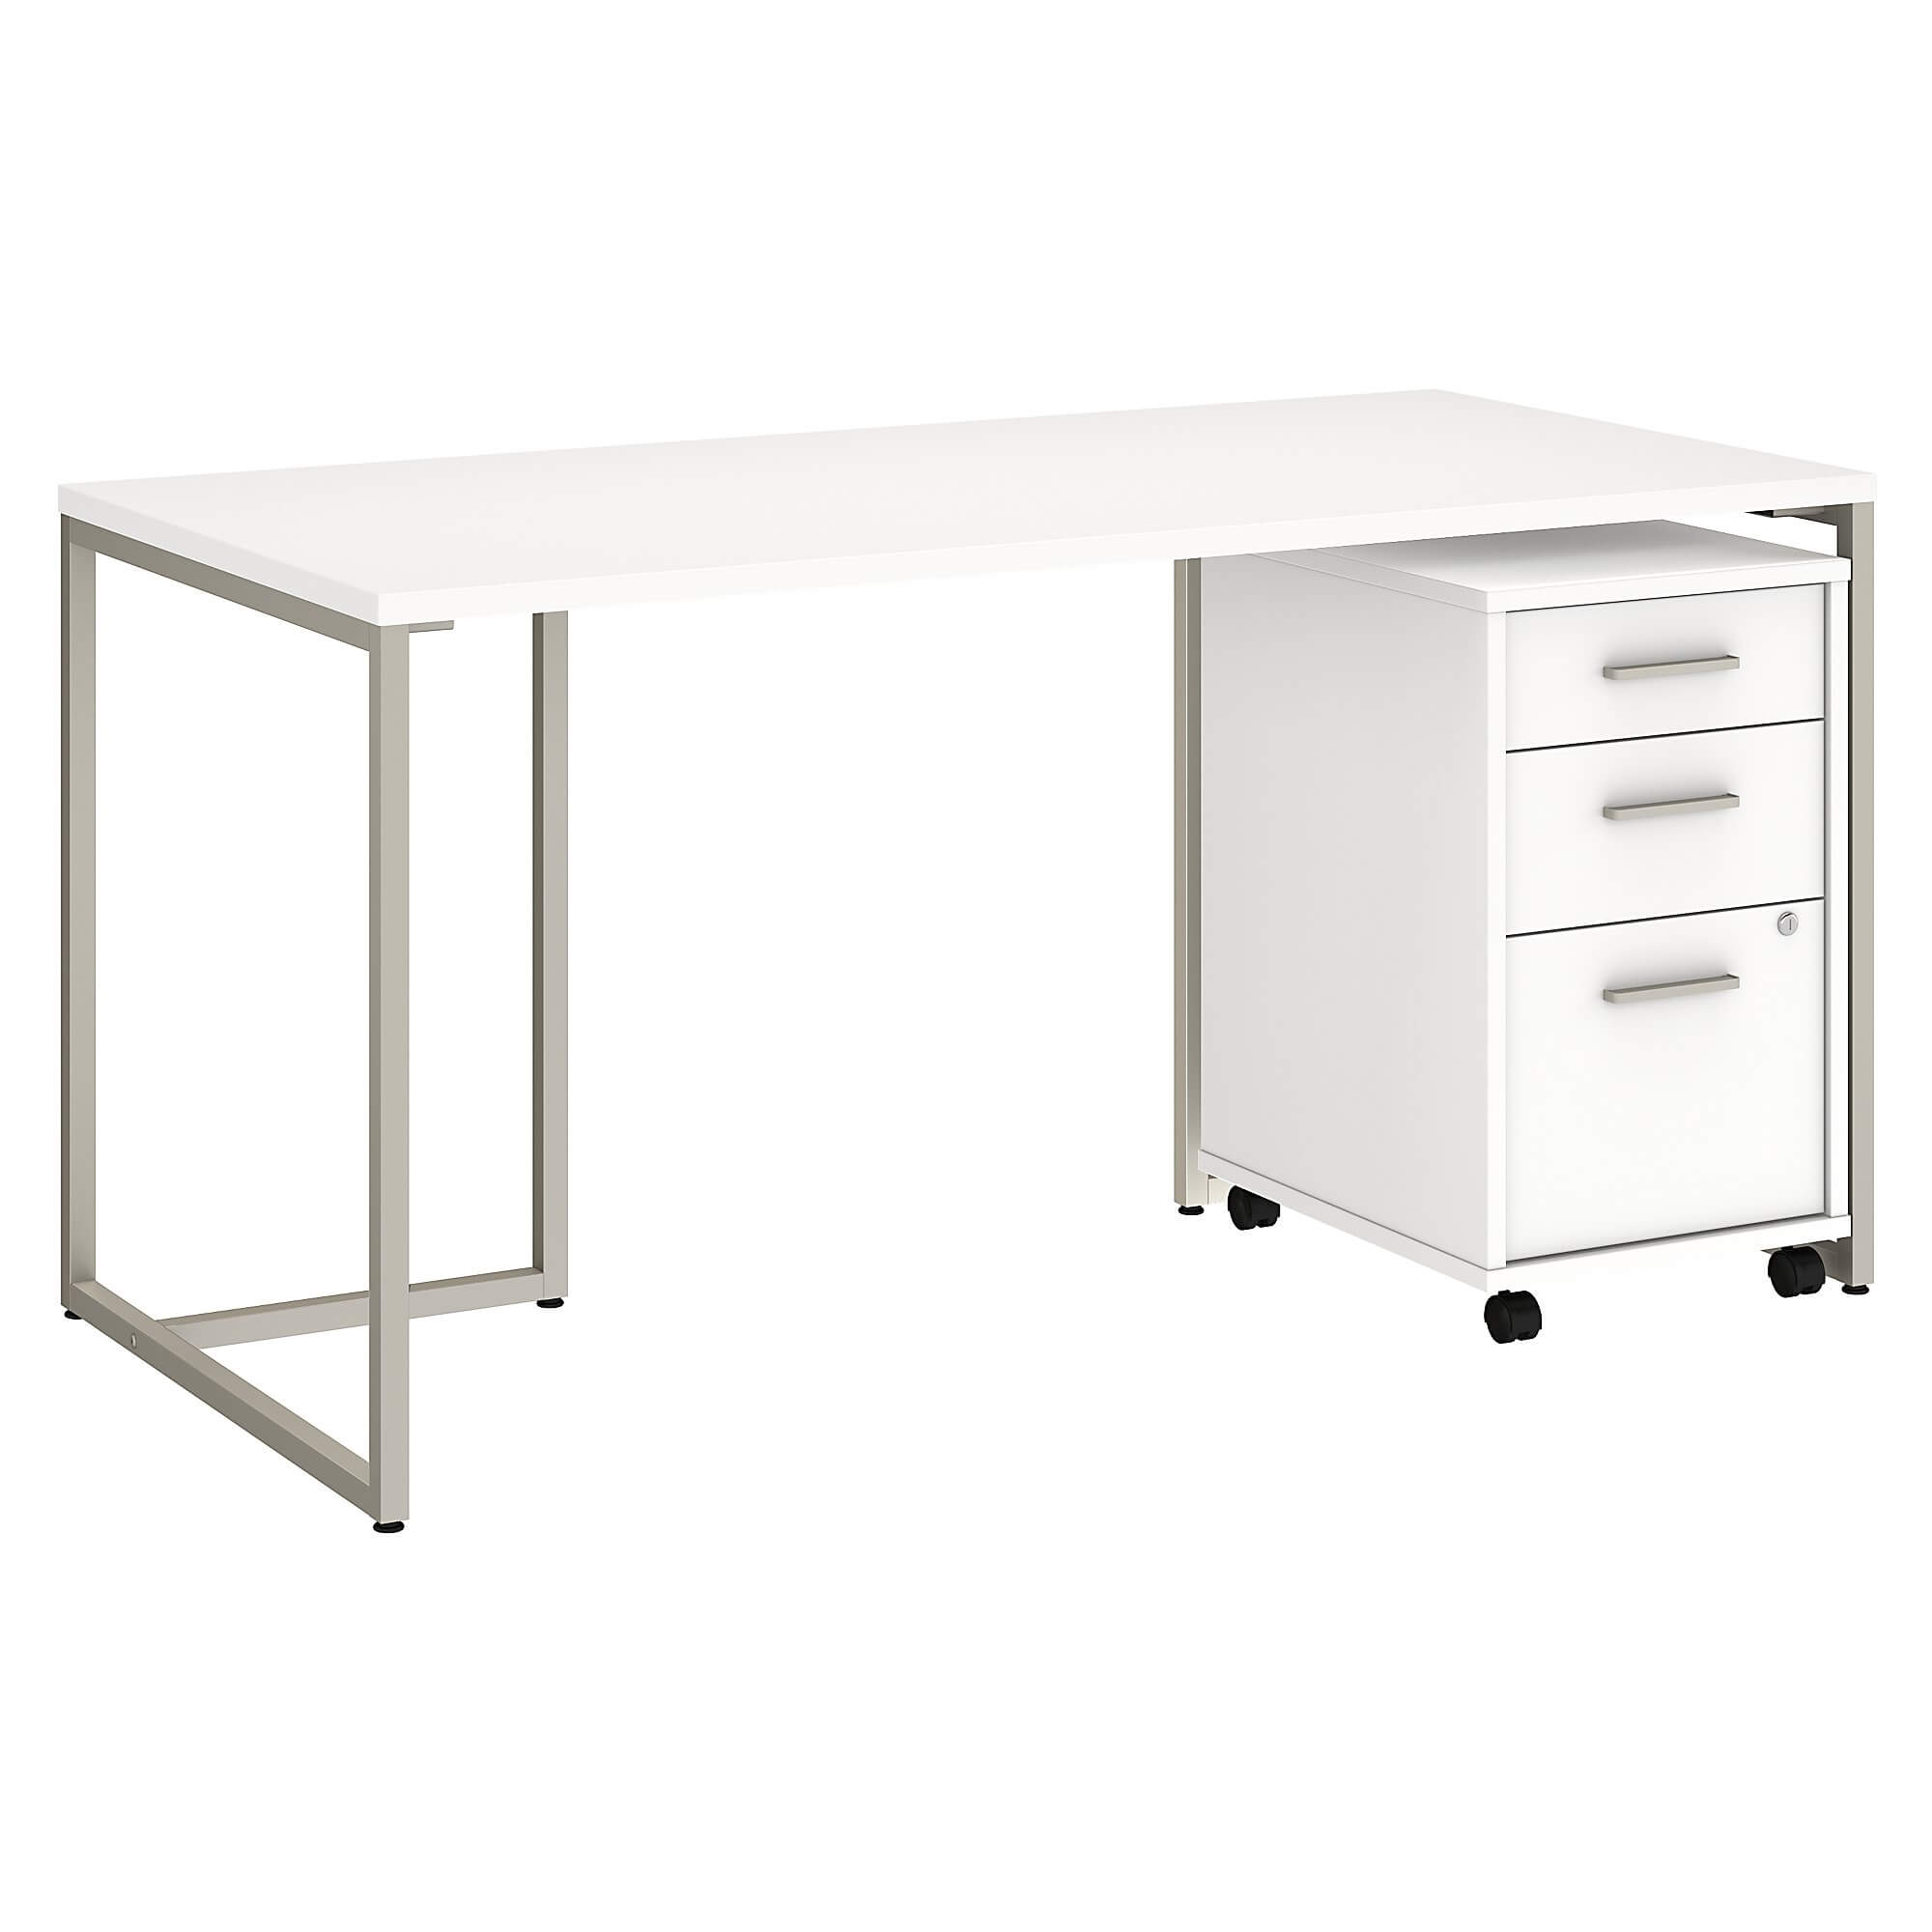 Desk furniture office desk in white